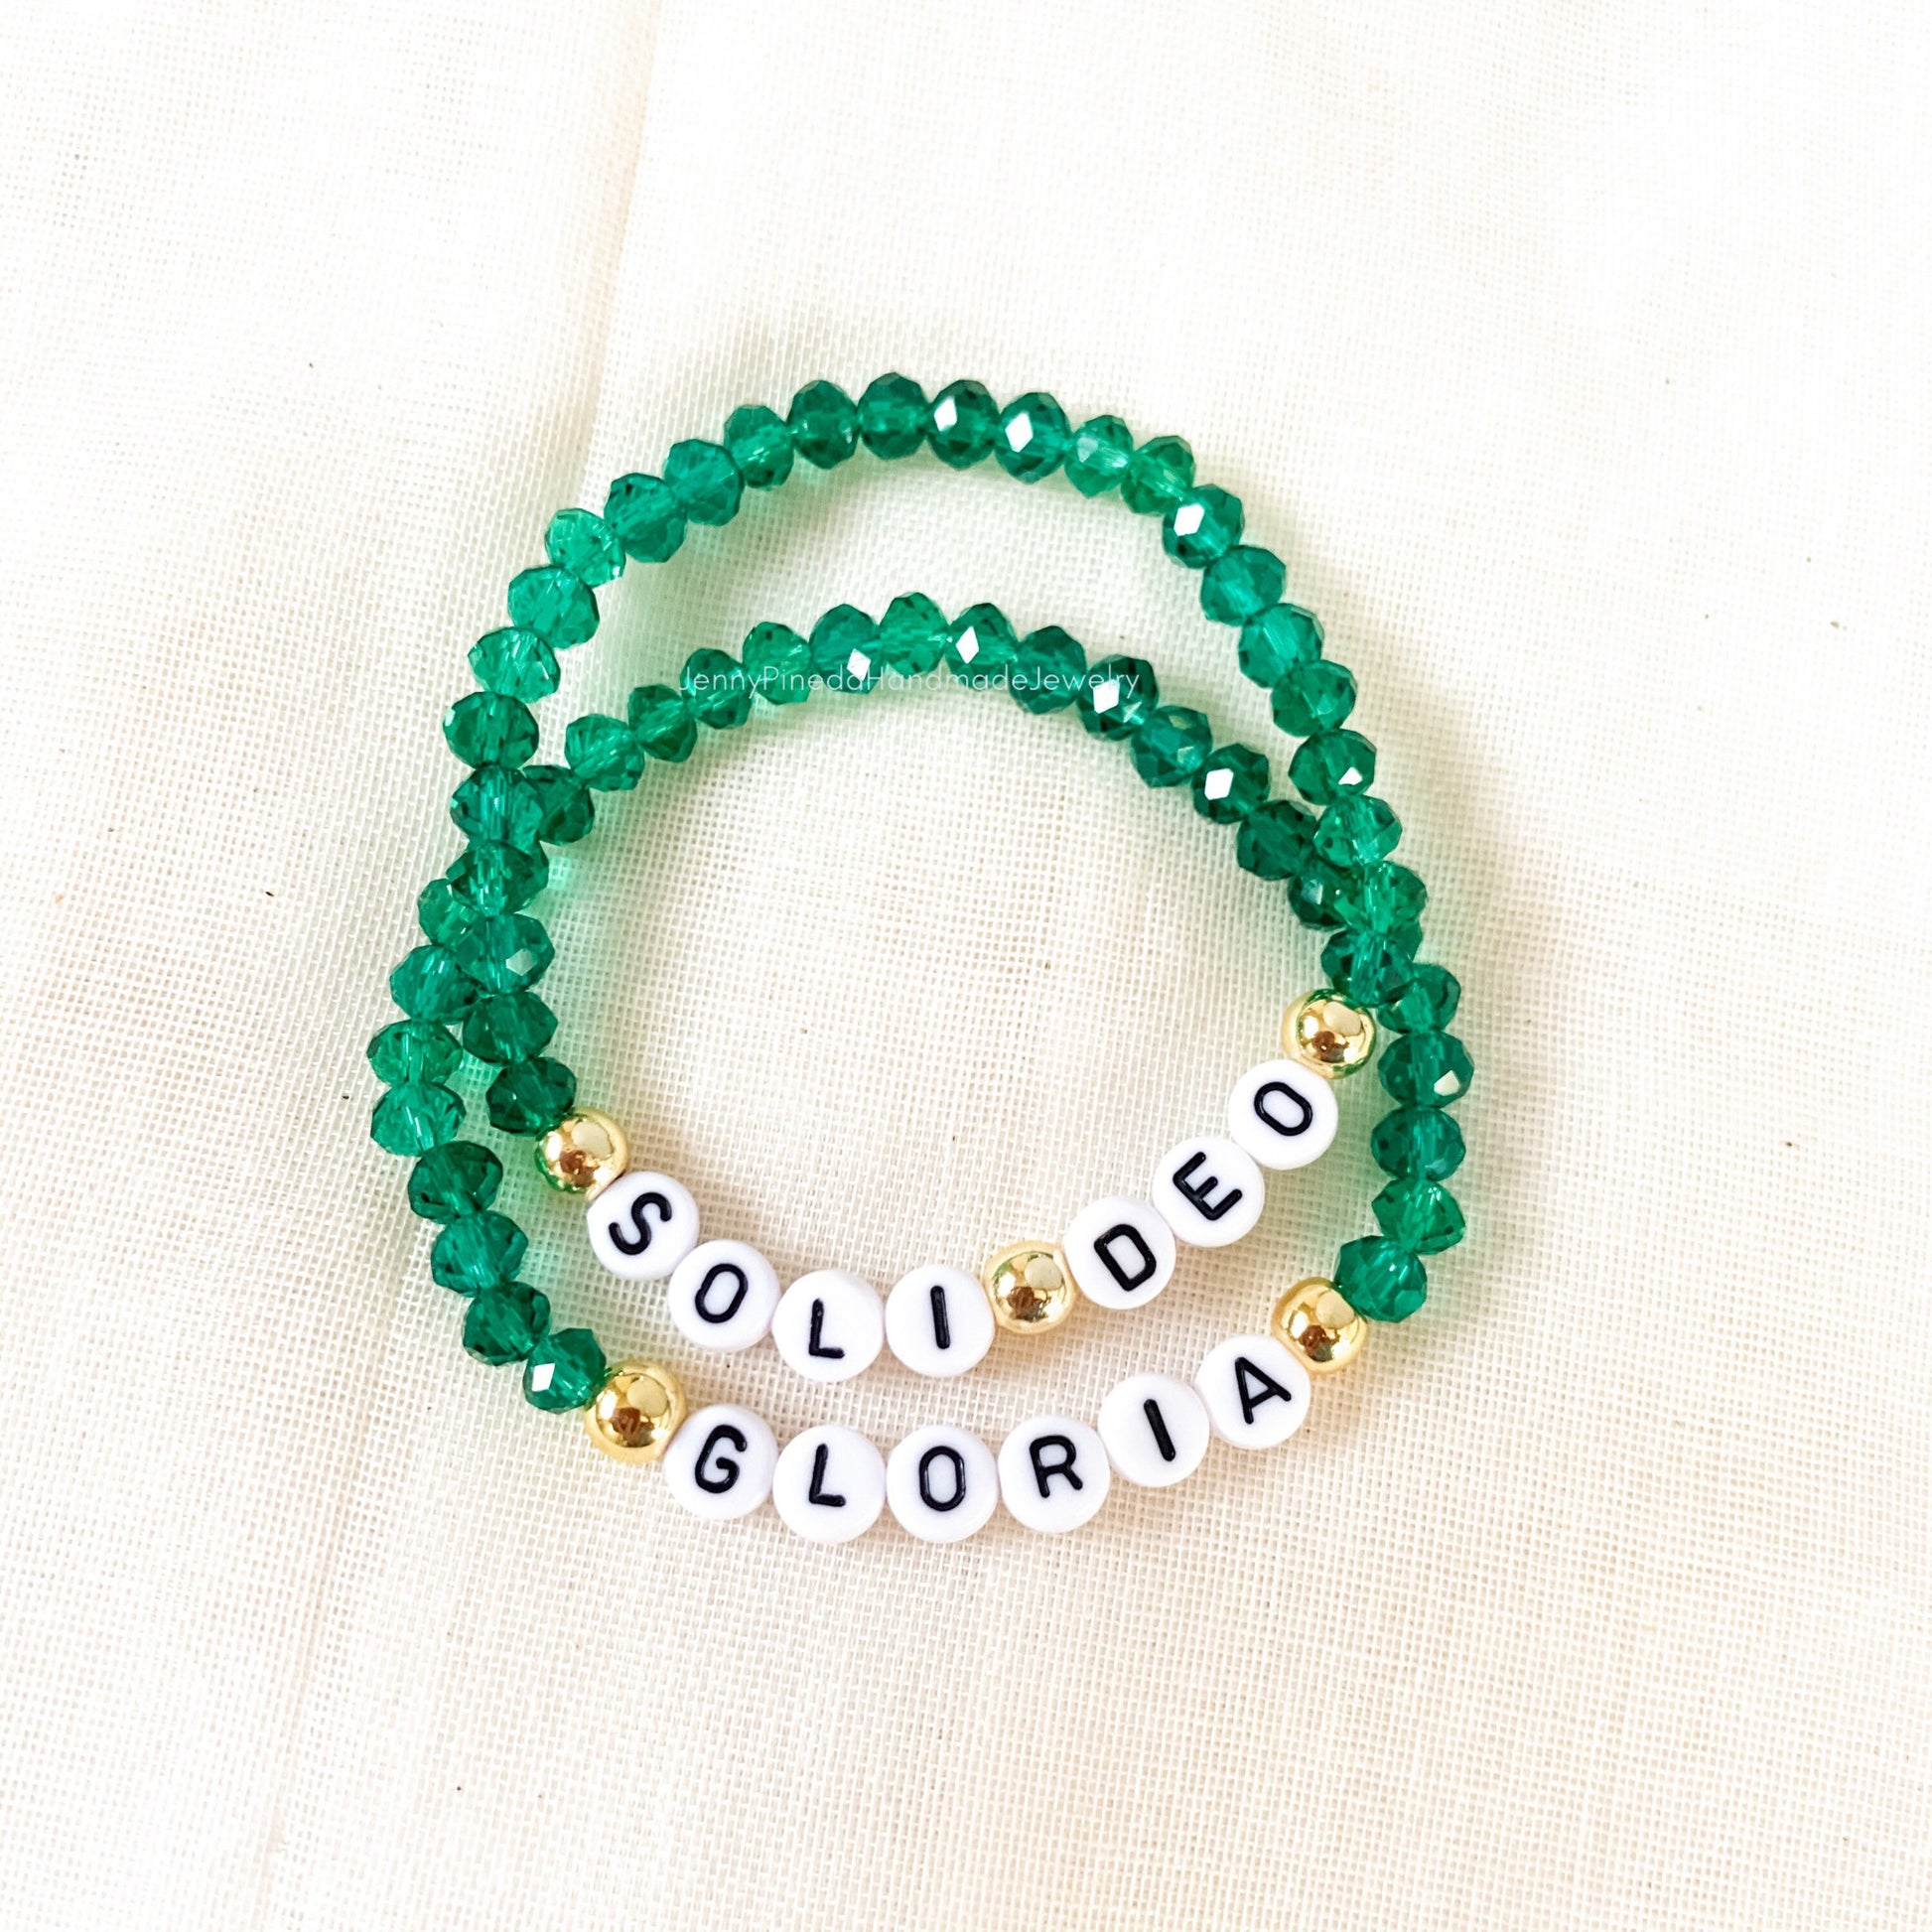 Soli Deo Gloria bracelet, reformed women gift, 5 Solas, reformed theology, faith bracelet, saved by grace, christian jewelry for women